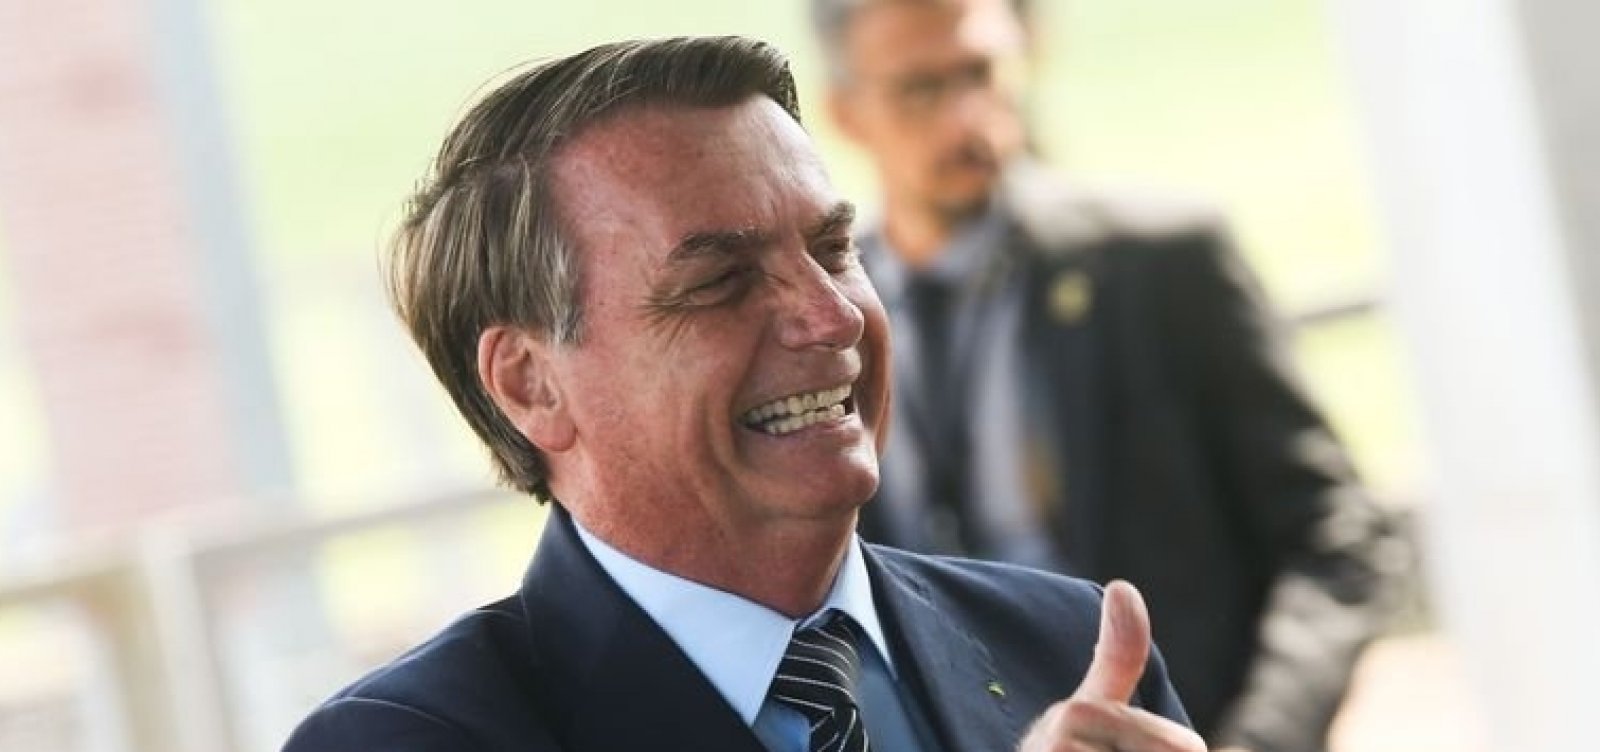 Governo só fará concursos públicos essenciais, diz Bolsonaro